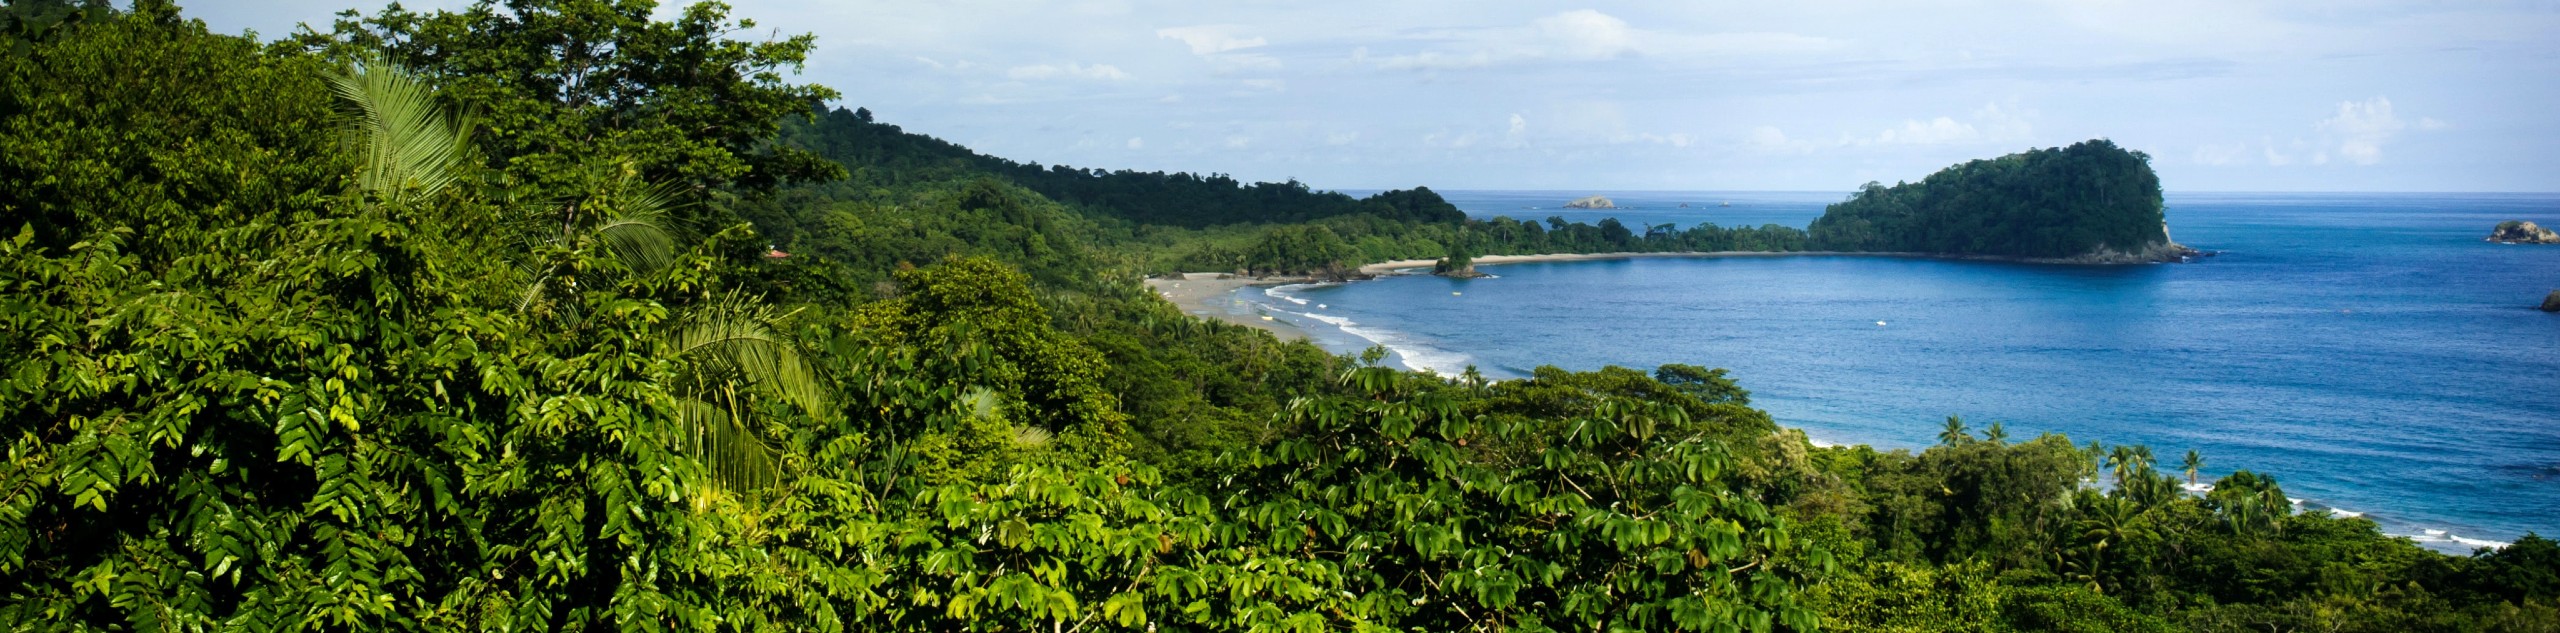 Rainforests of Costa Rica